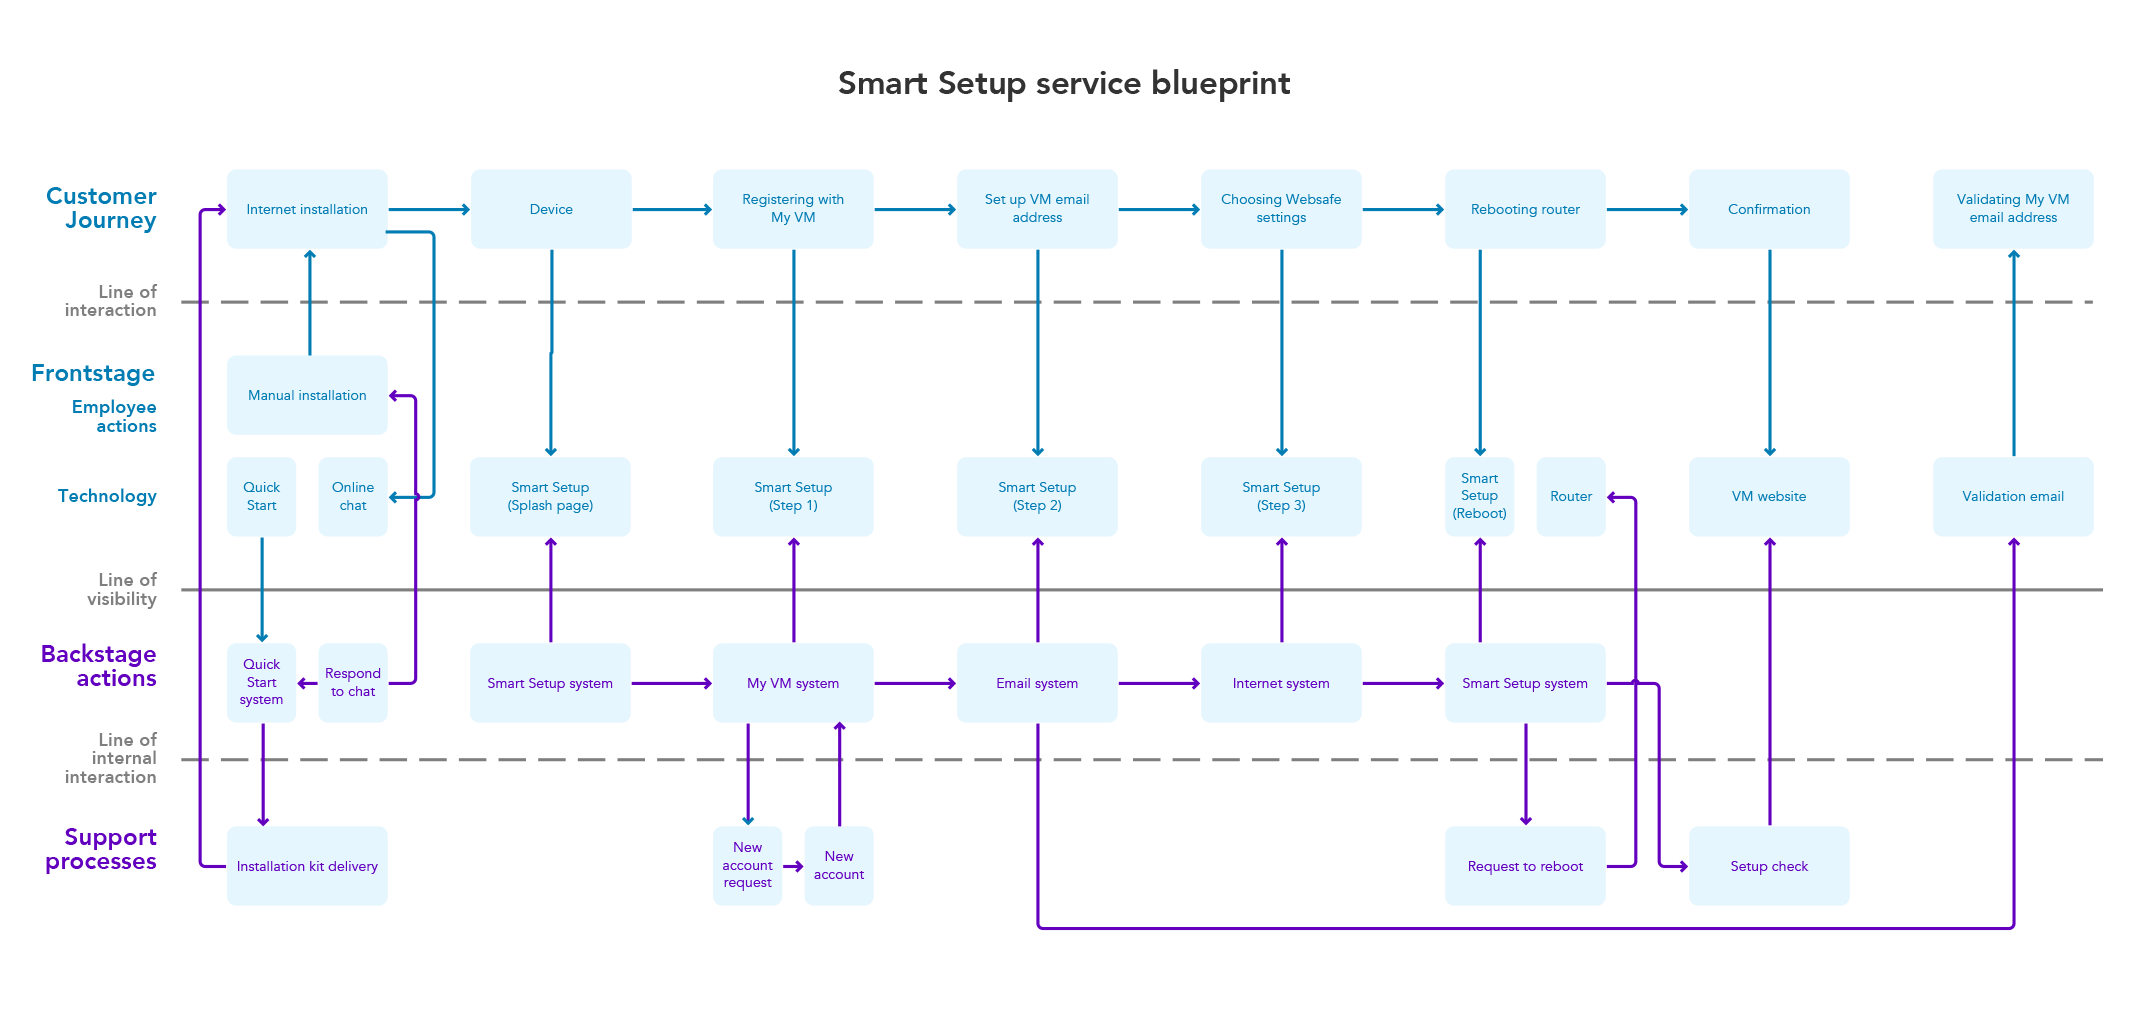 Virgin Media Smart Setup service blueprint